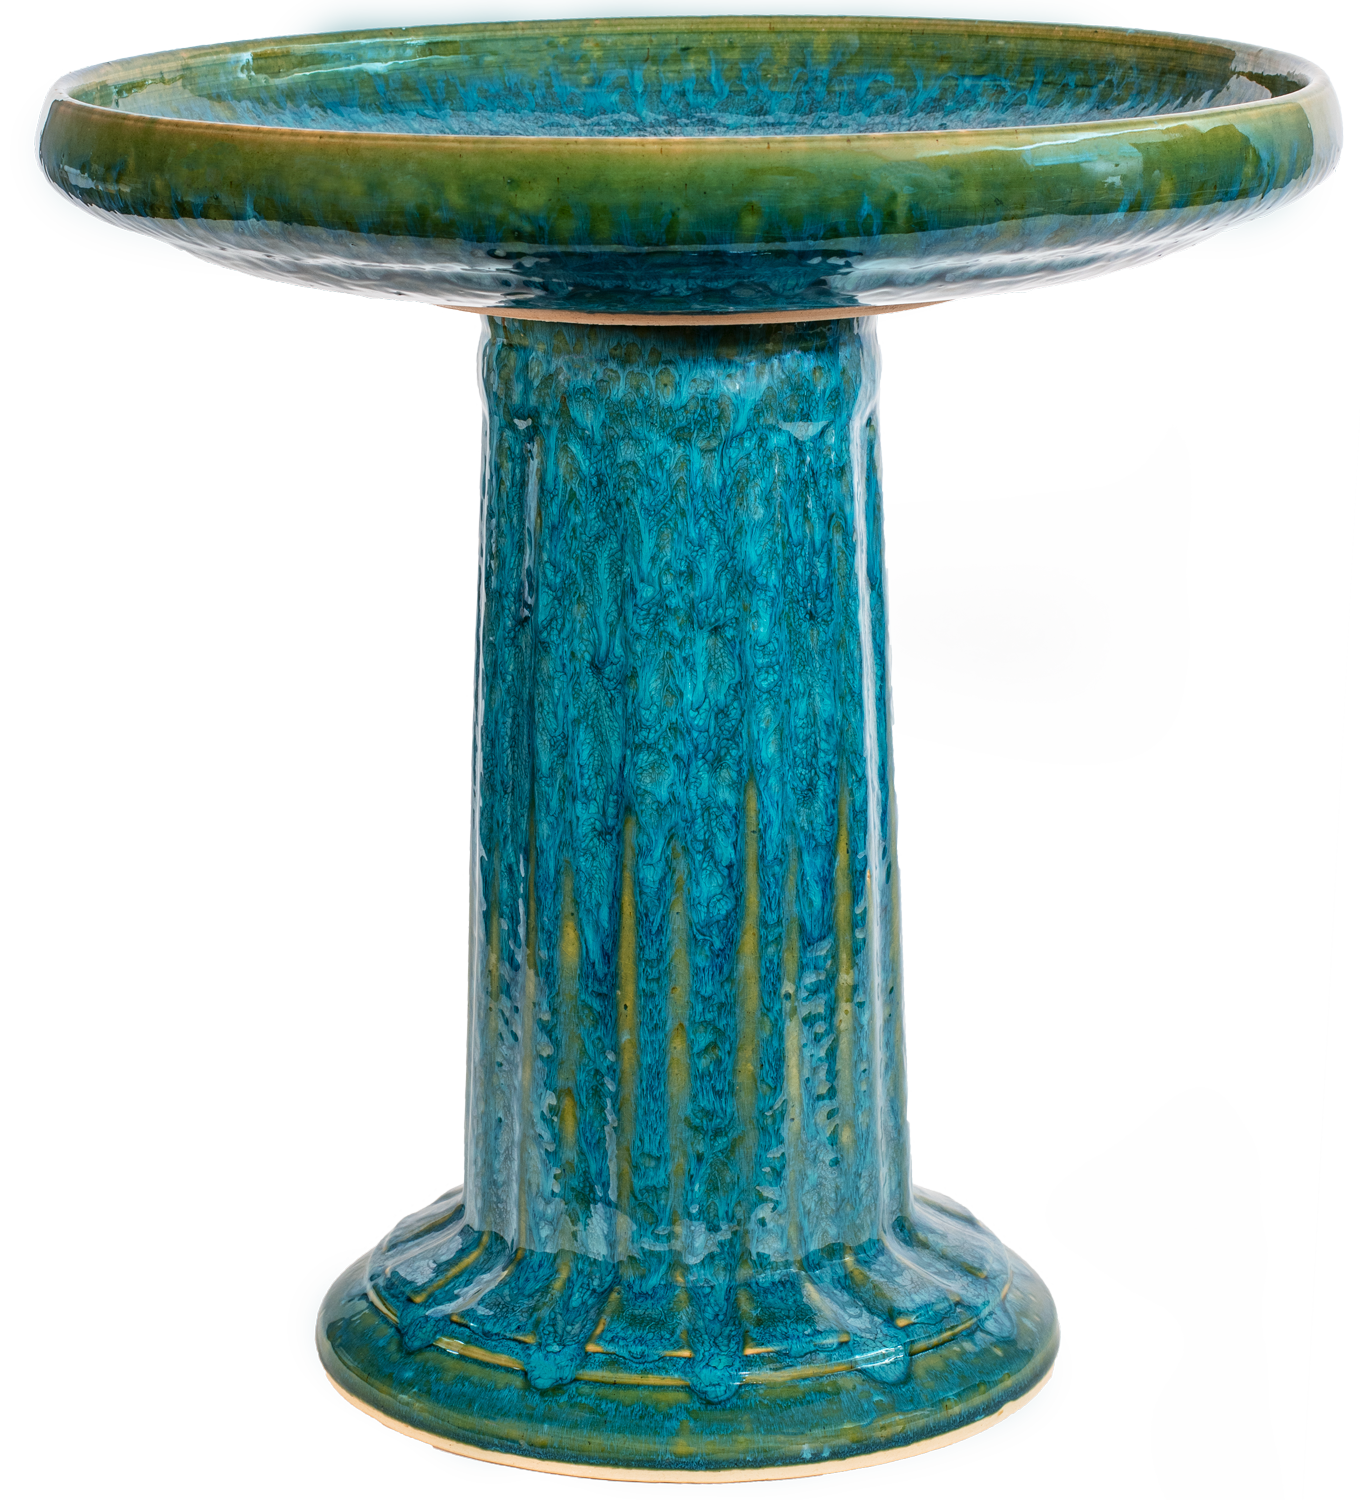 Ceramic turquoise birdbath set with modern clean column design